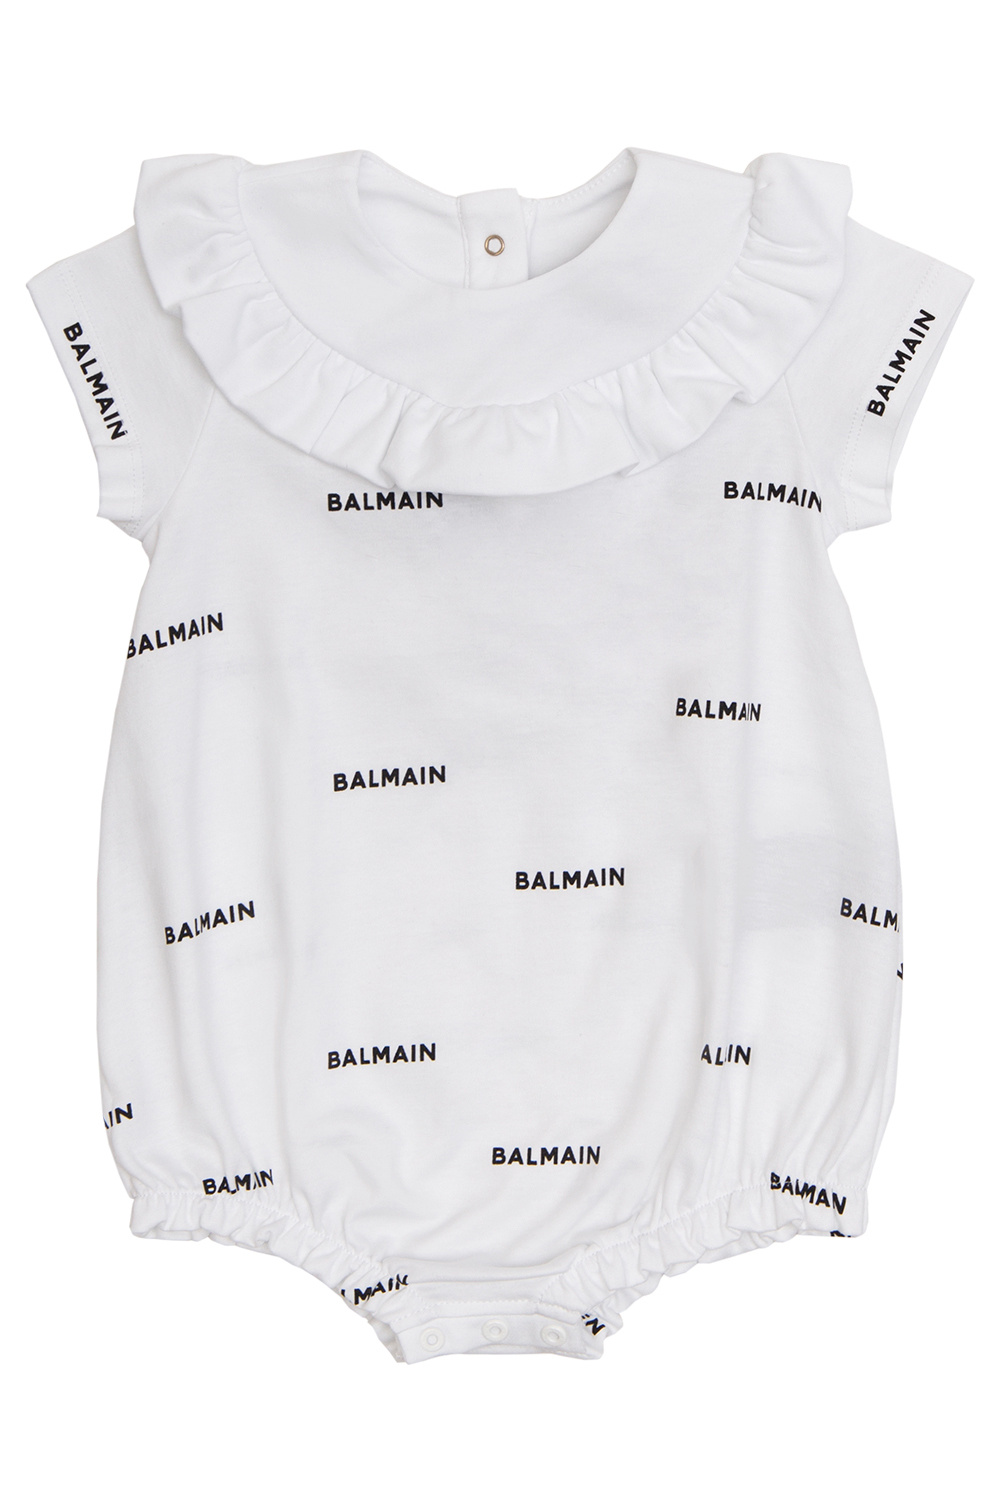 Balmain Kids Balmain Sweatshirt With Print